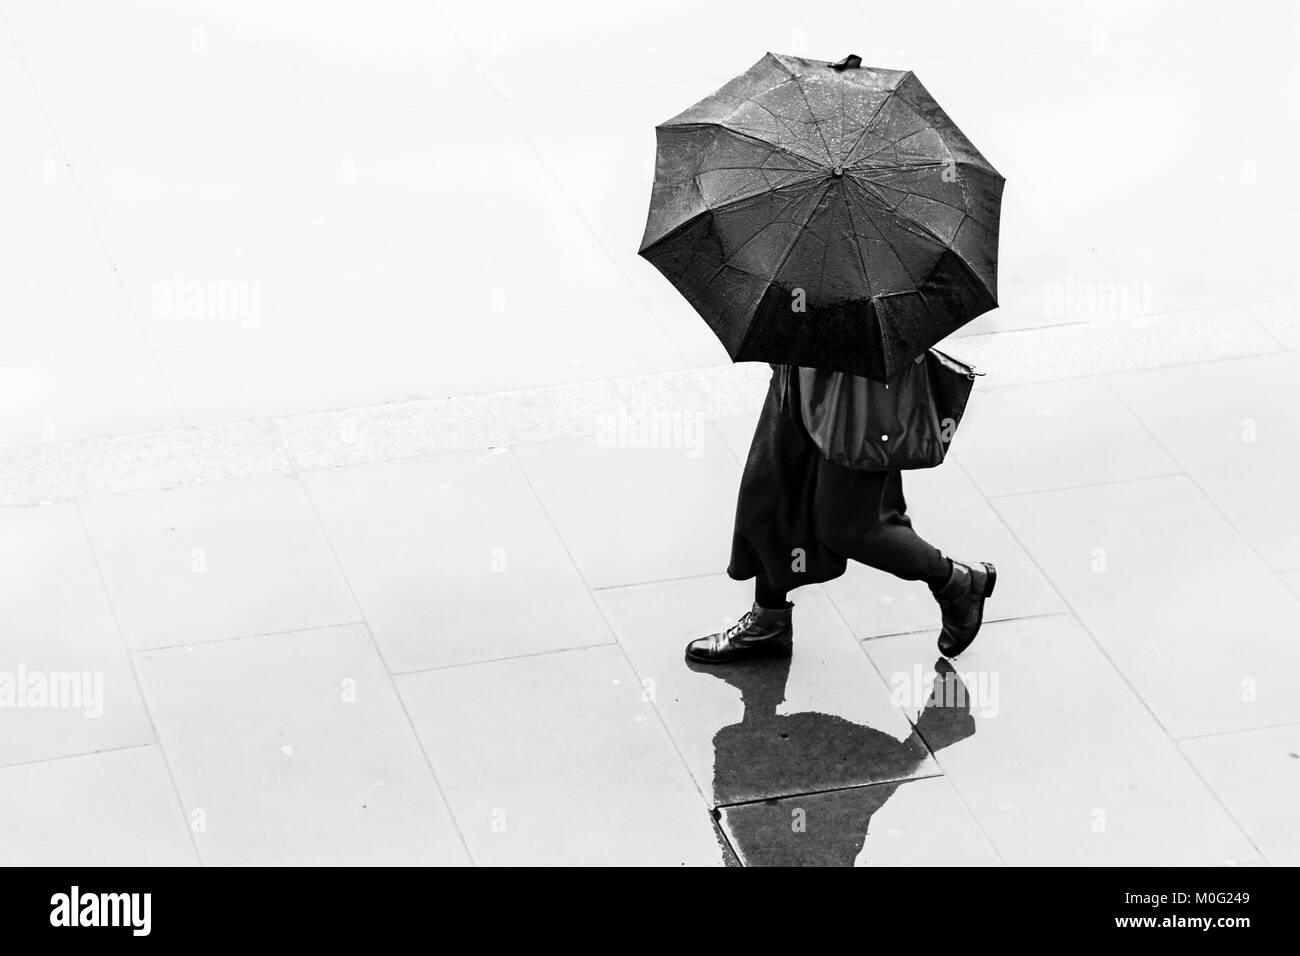 London schwarz-weiss Fotografie Frau wandern im Regen mit Regenschirm  Stockfotografie - Alamy